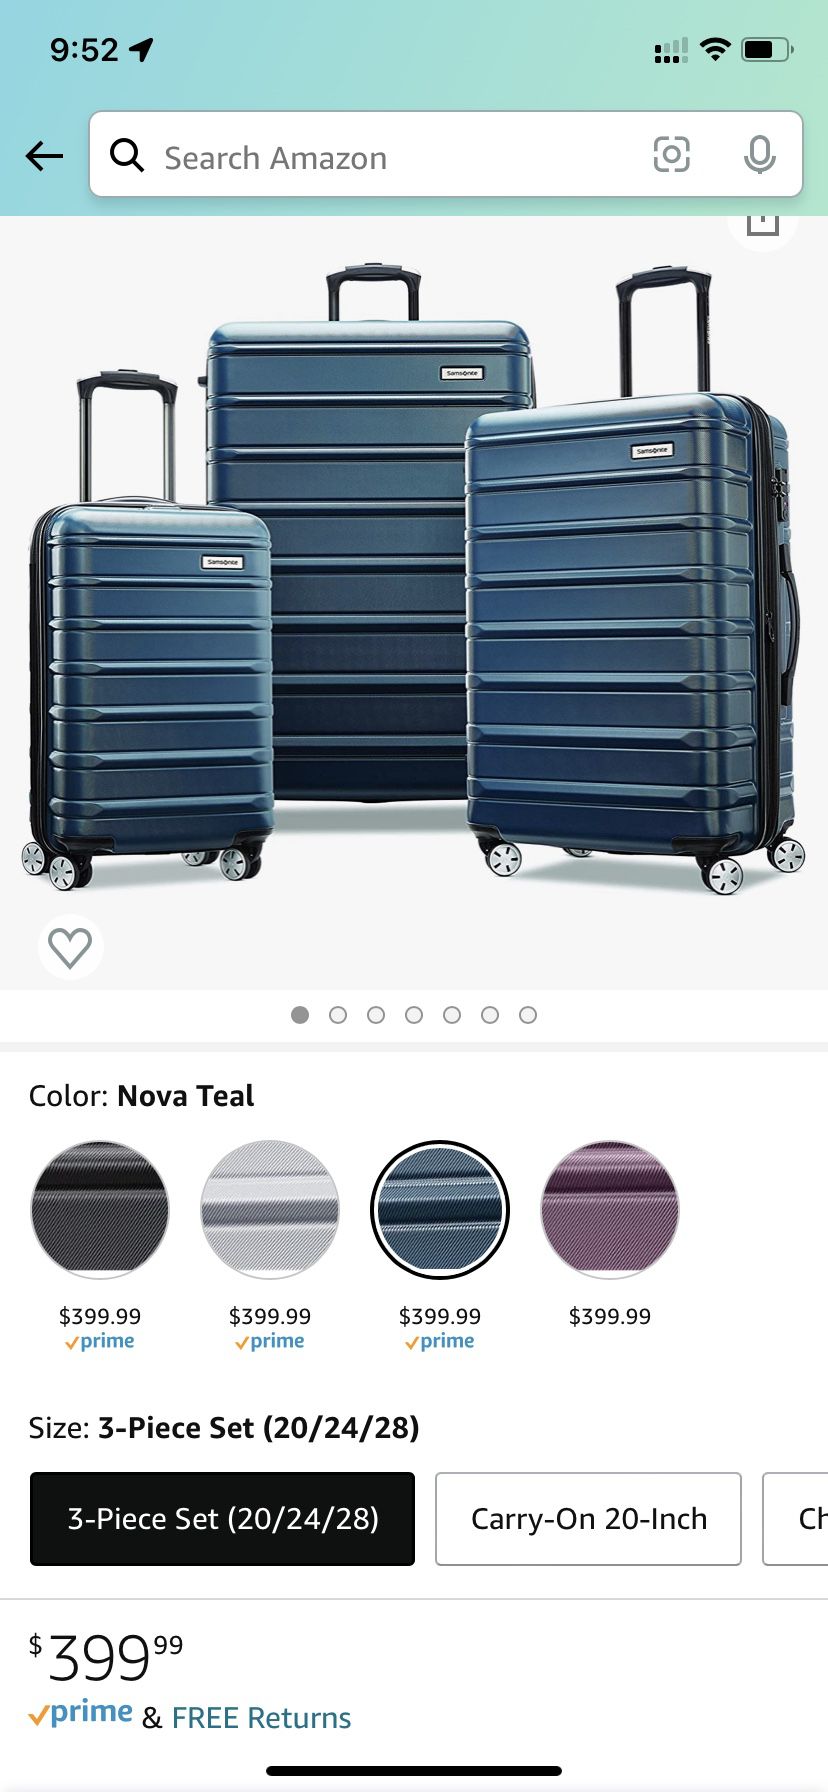 Luggage - Samsonite Omni 2 Hardside Expandable Luggage with Spinner Wheels, Nova Teal, 3-Piece Set